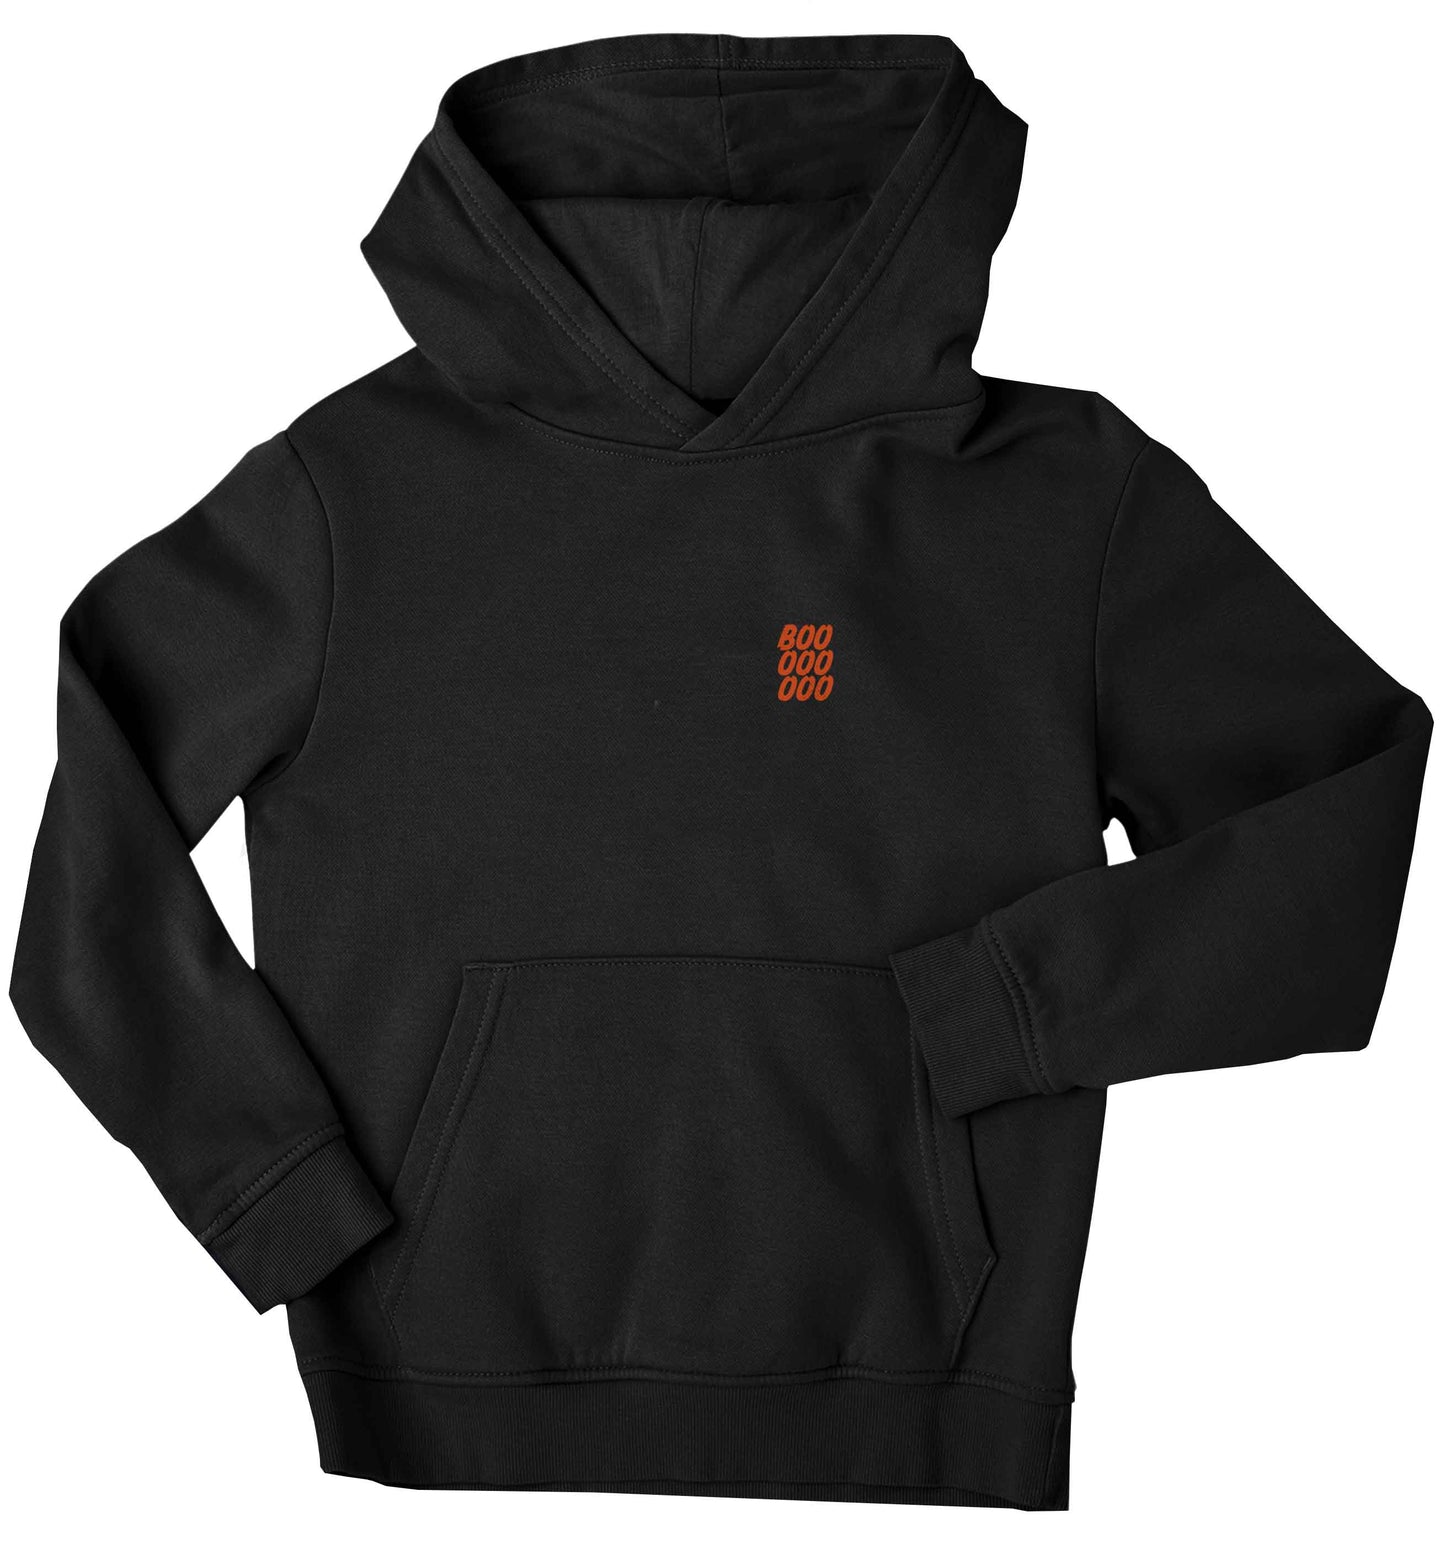 Boo pocket children's black hoodie 12-13 Years